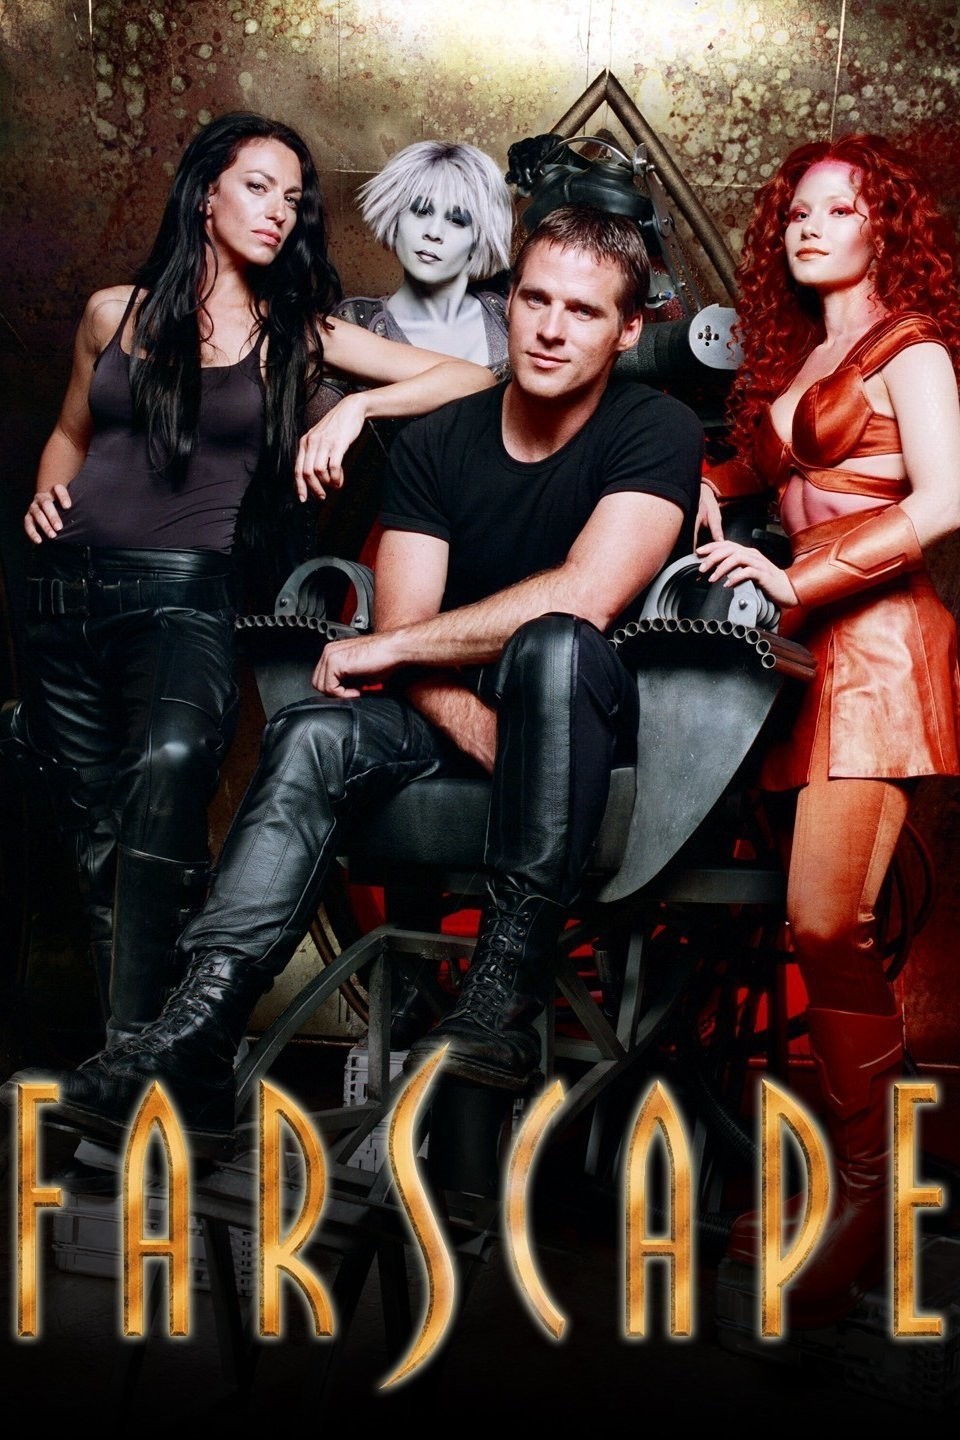 Farscape: Season 4 | Rotten Tomatoes